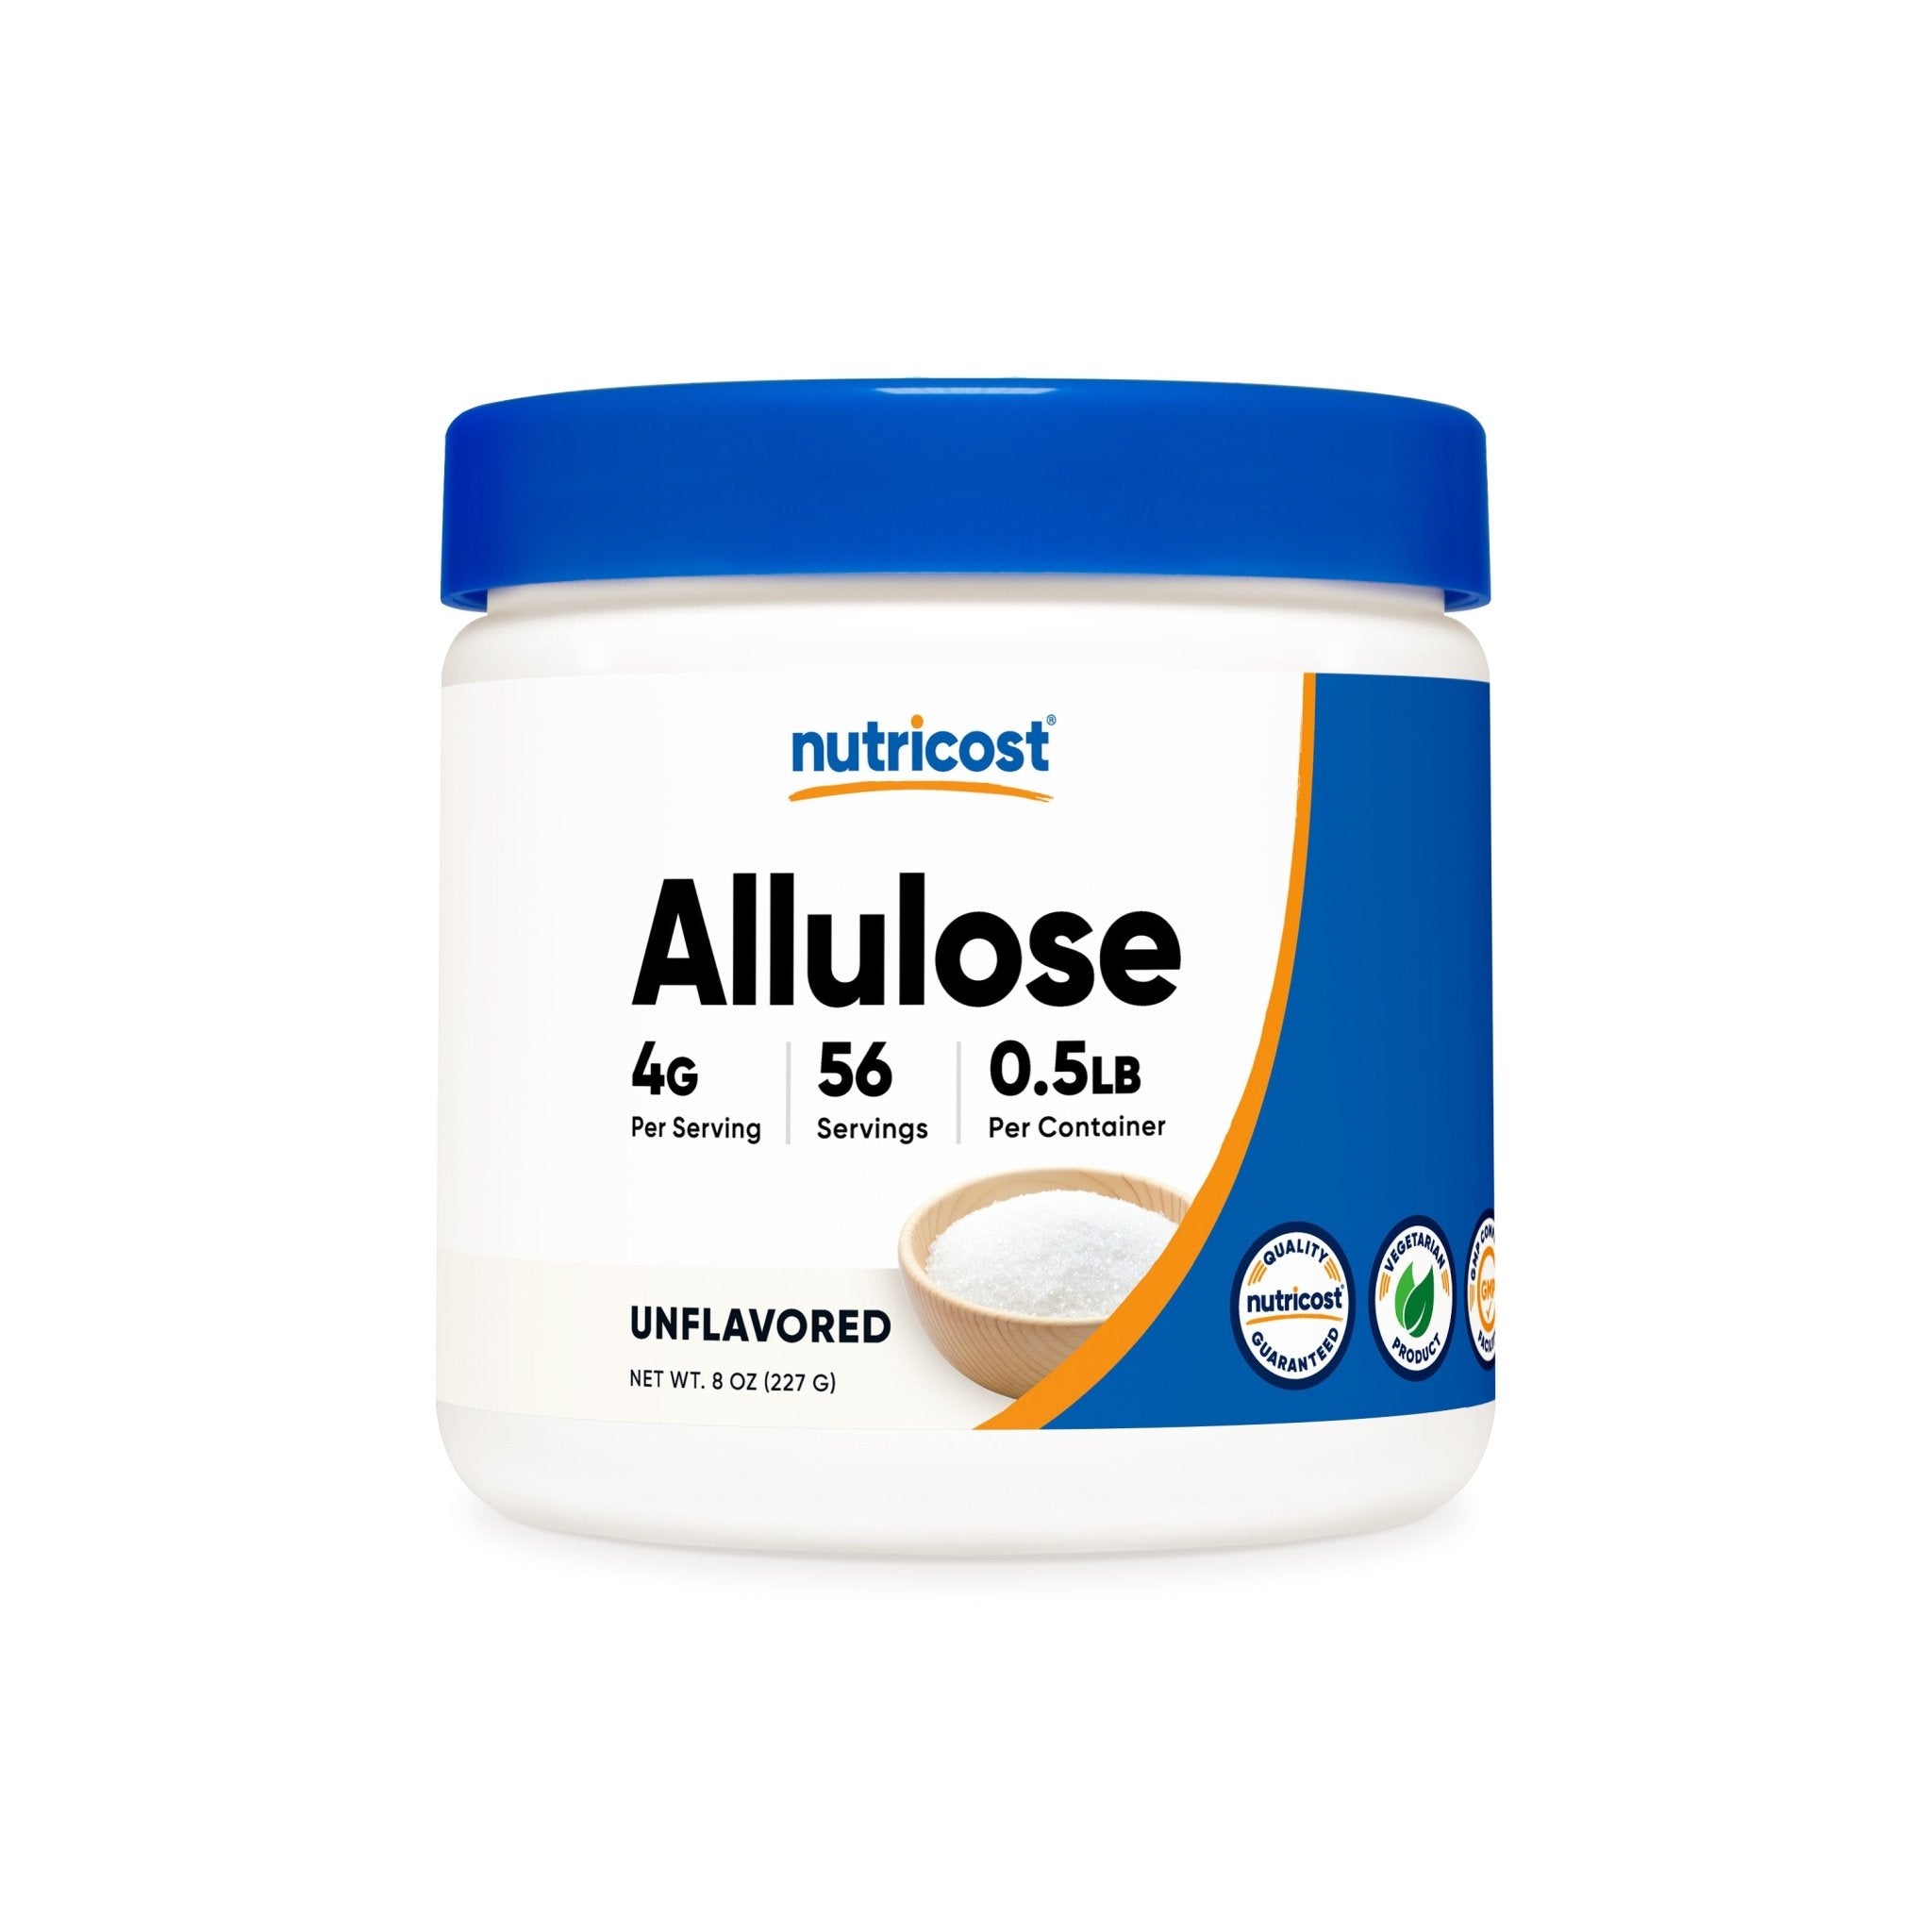 Organic Allulose Sweetener